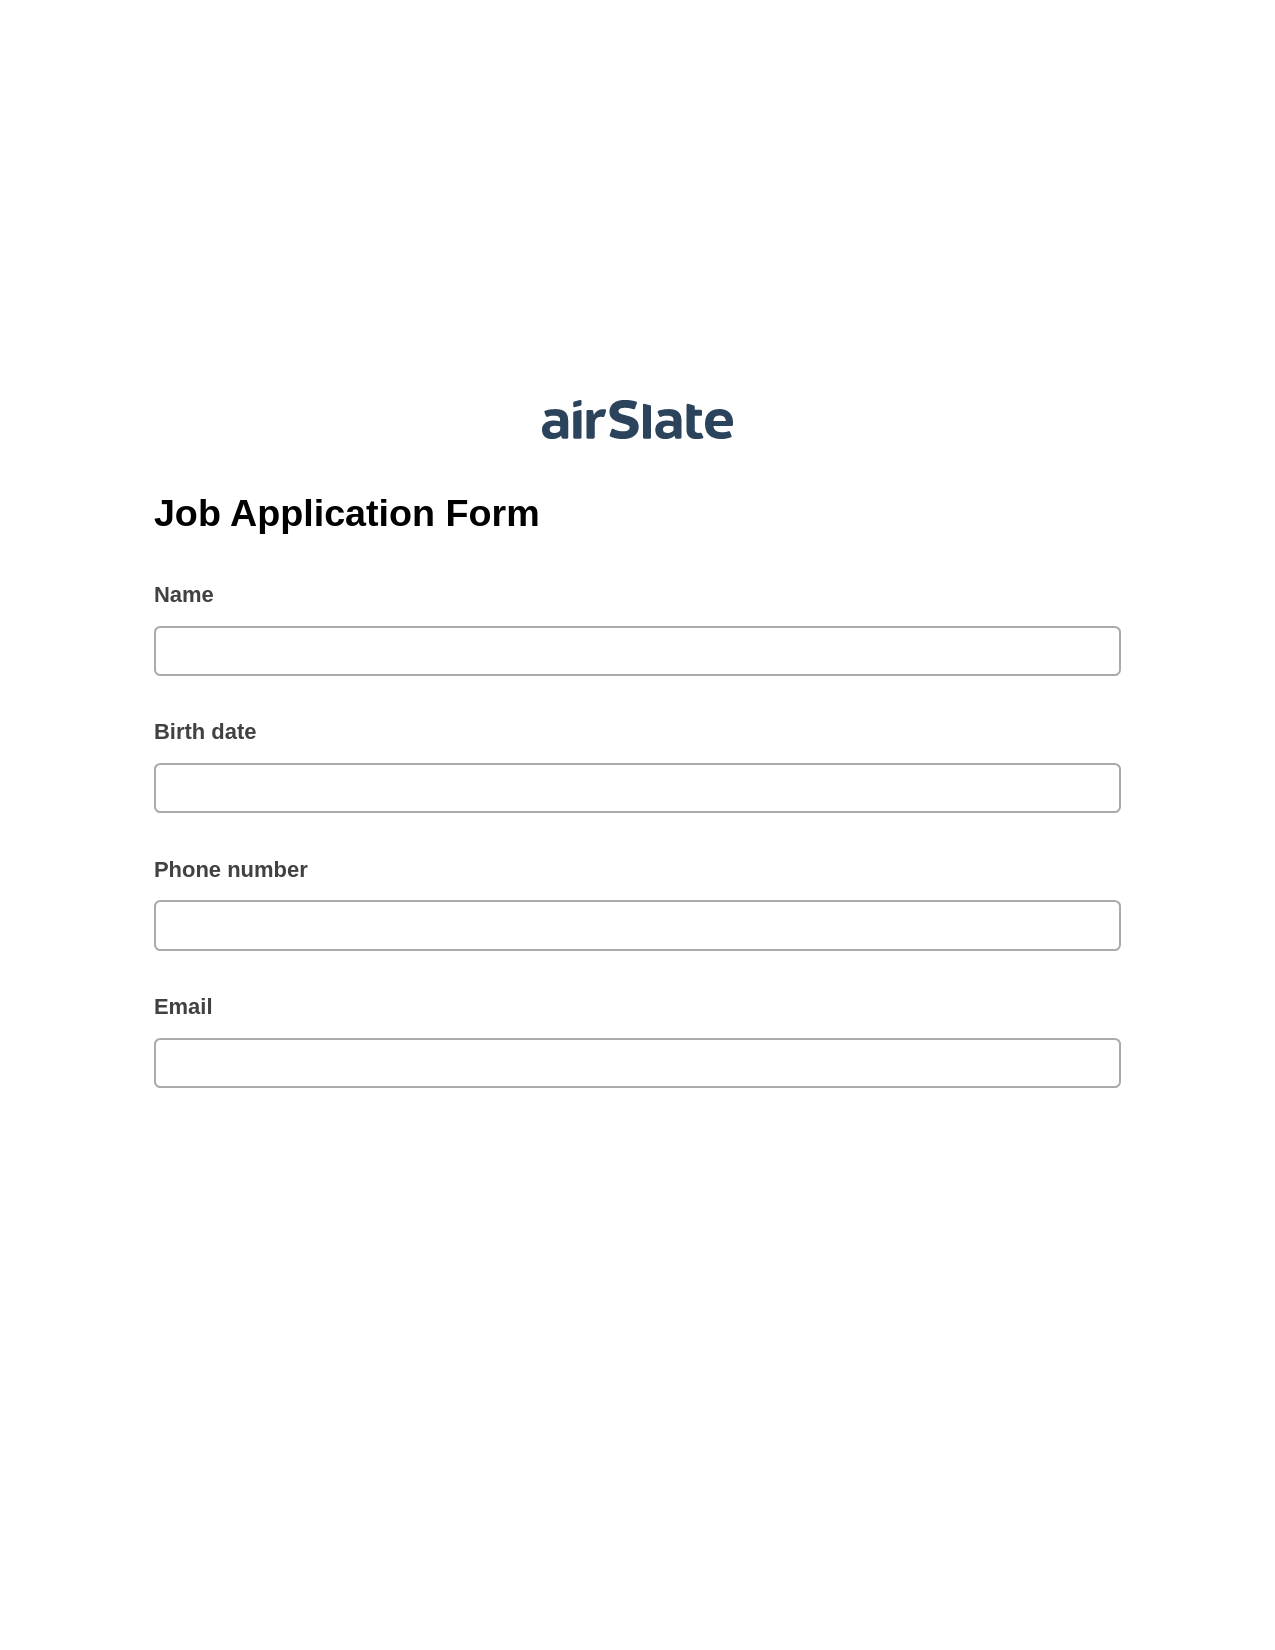 Job Application Form Pre-fill from Litmos bot, Update NetSuite Records Bot, Google Drive Bot